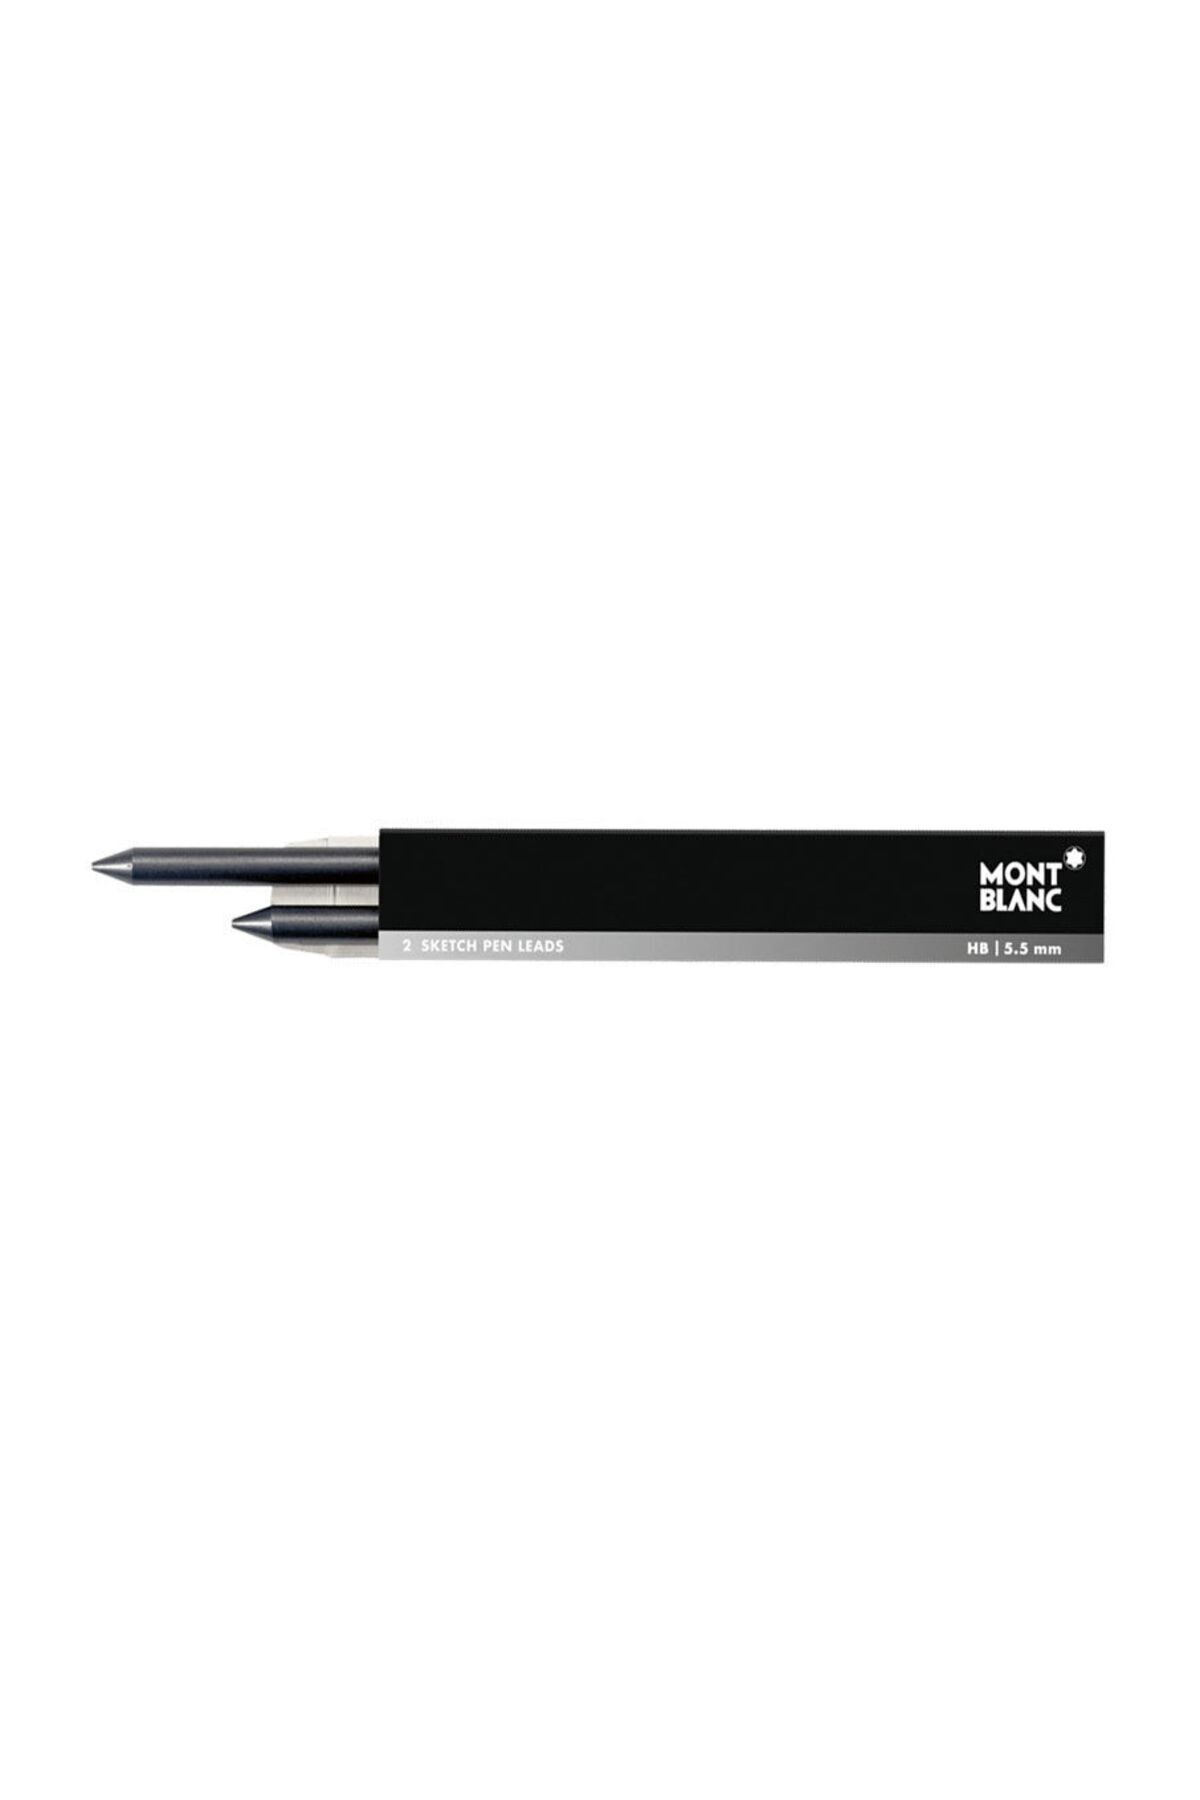 Mont Blanc 2'li Leonardo Sketch Pen Leads Hb 5.5 mm 111755